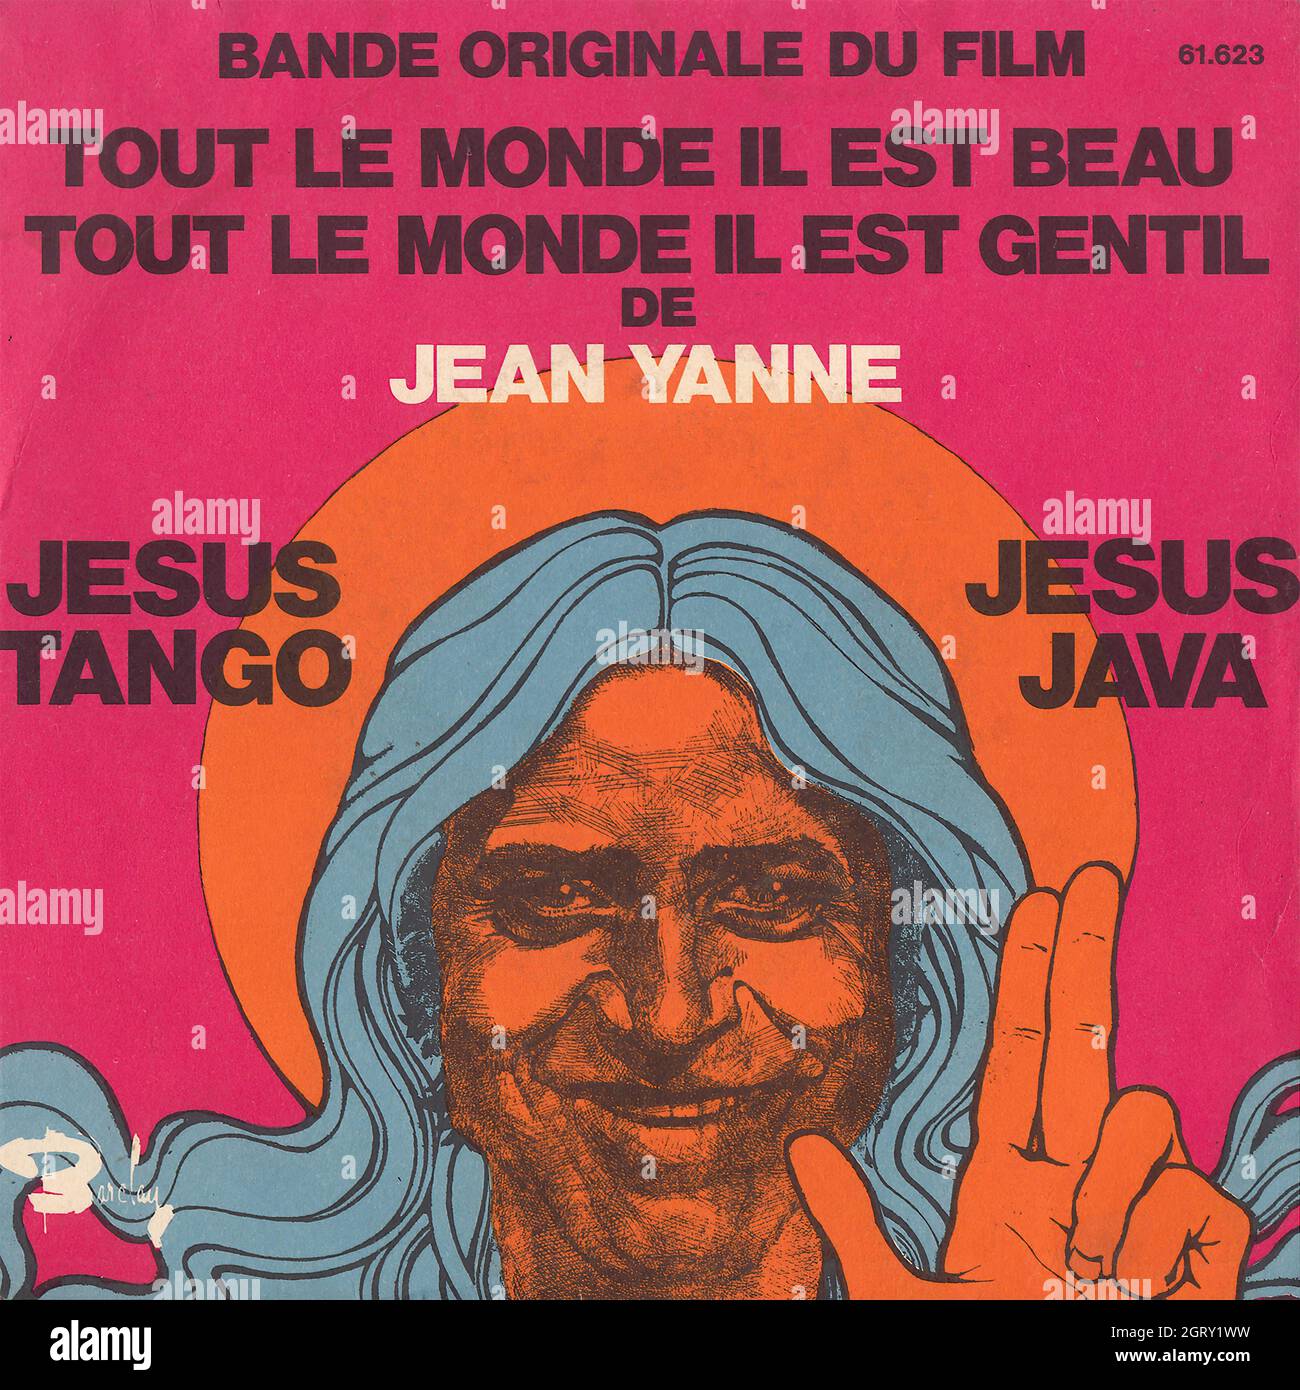 Michel Magne - Jean Yanne - Jesus Tango - Jesus Java 45rpm - Vintage Vinyl  Record Cover Stock Photo - Alamy